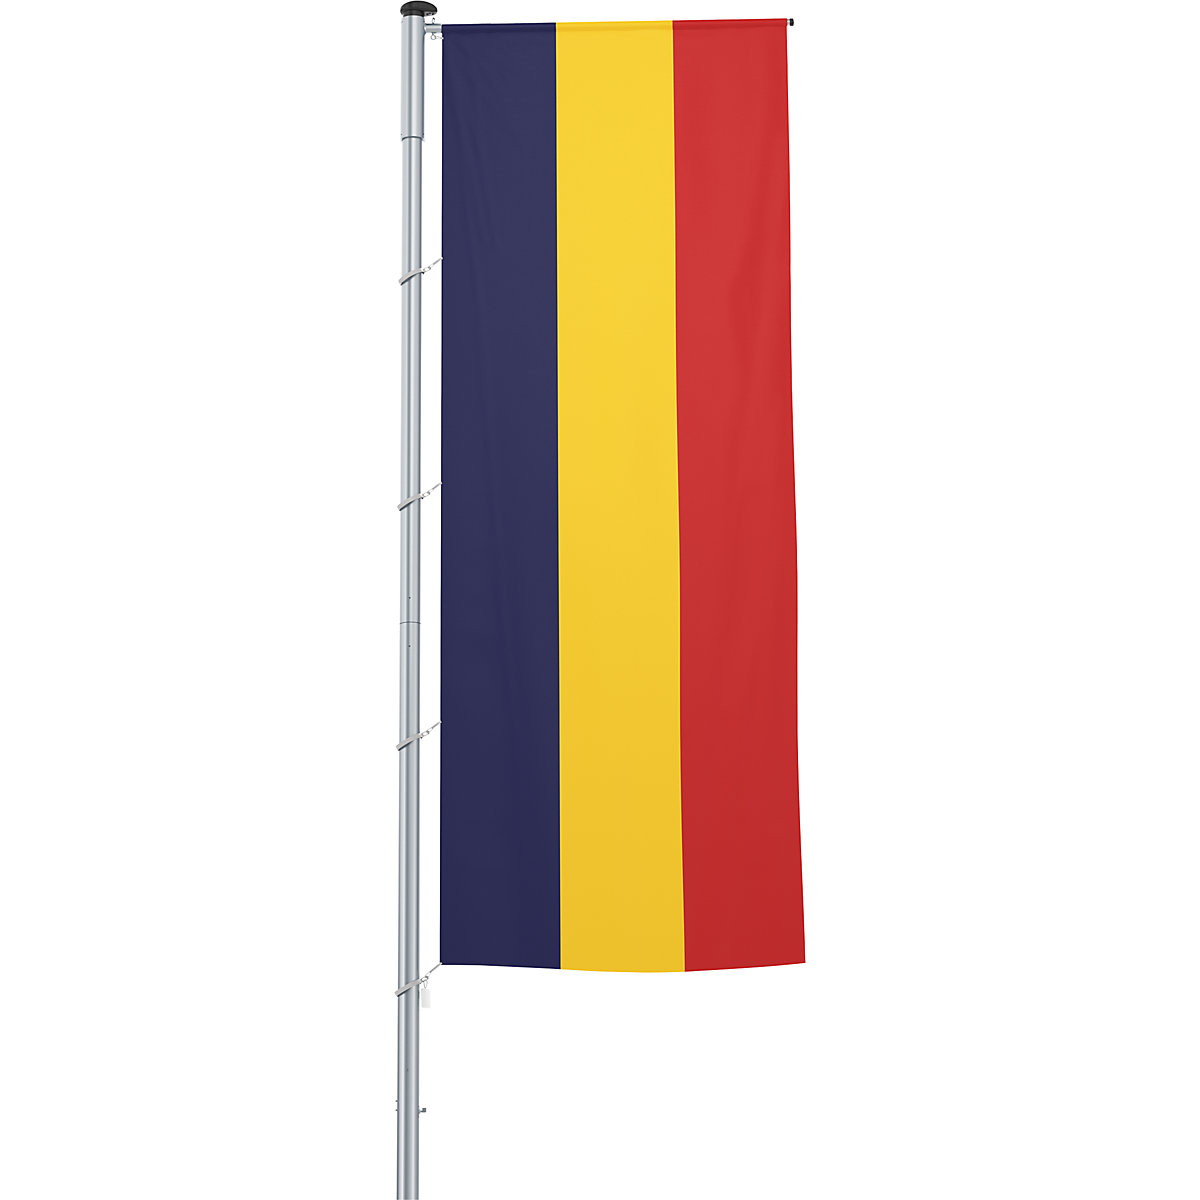 Flaga na wysięgniku/flaga państwowa – Mannus